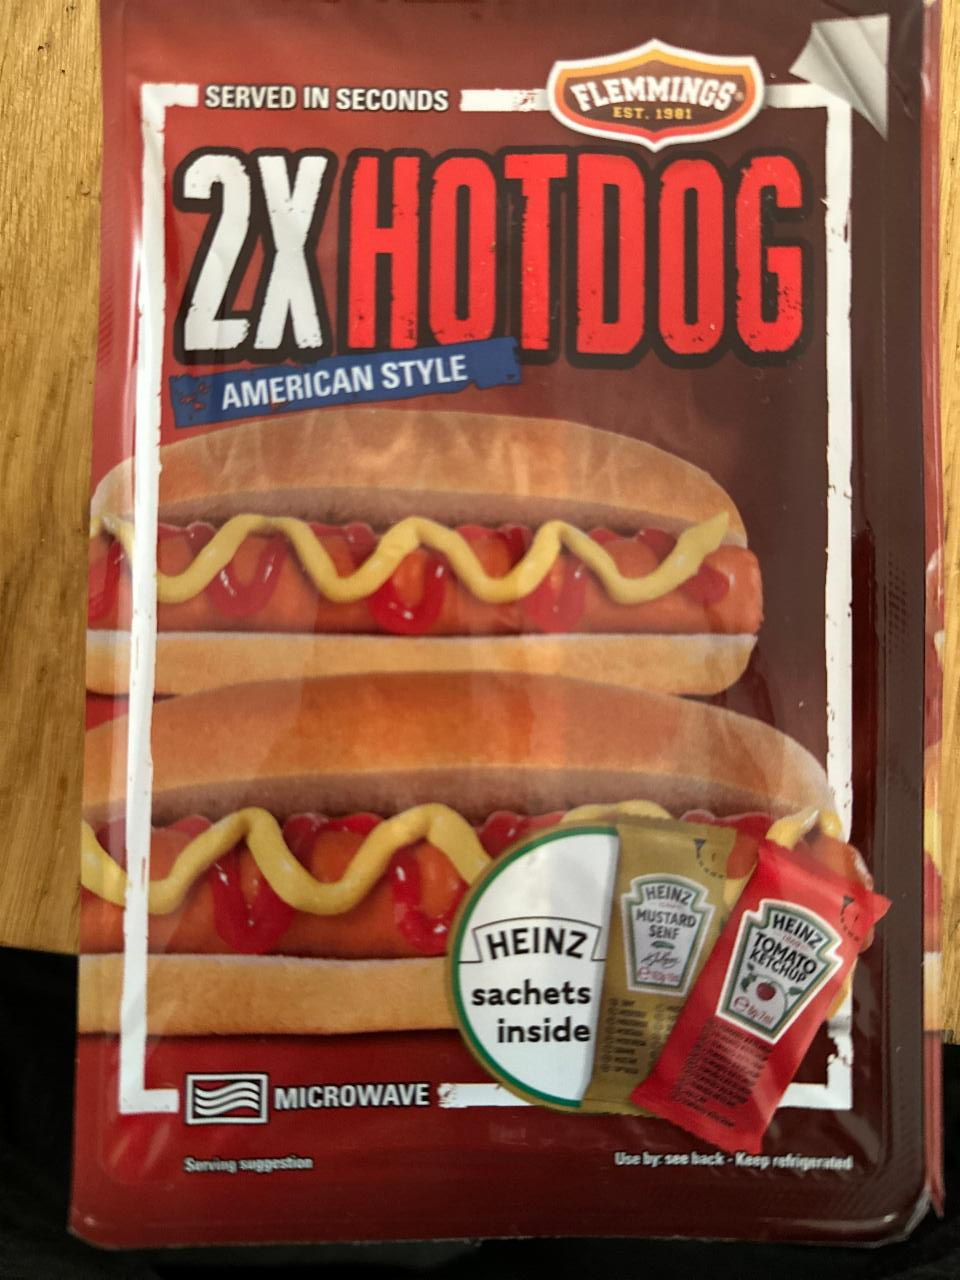 Zdjęcia - 2x hotdog american style Flemmings